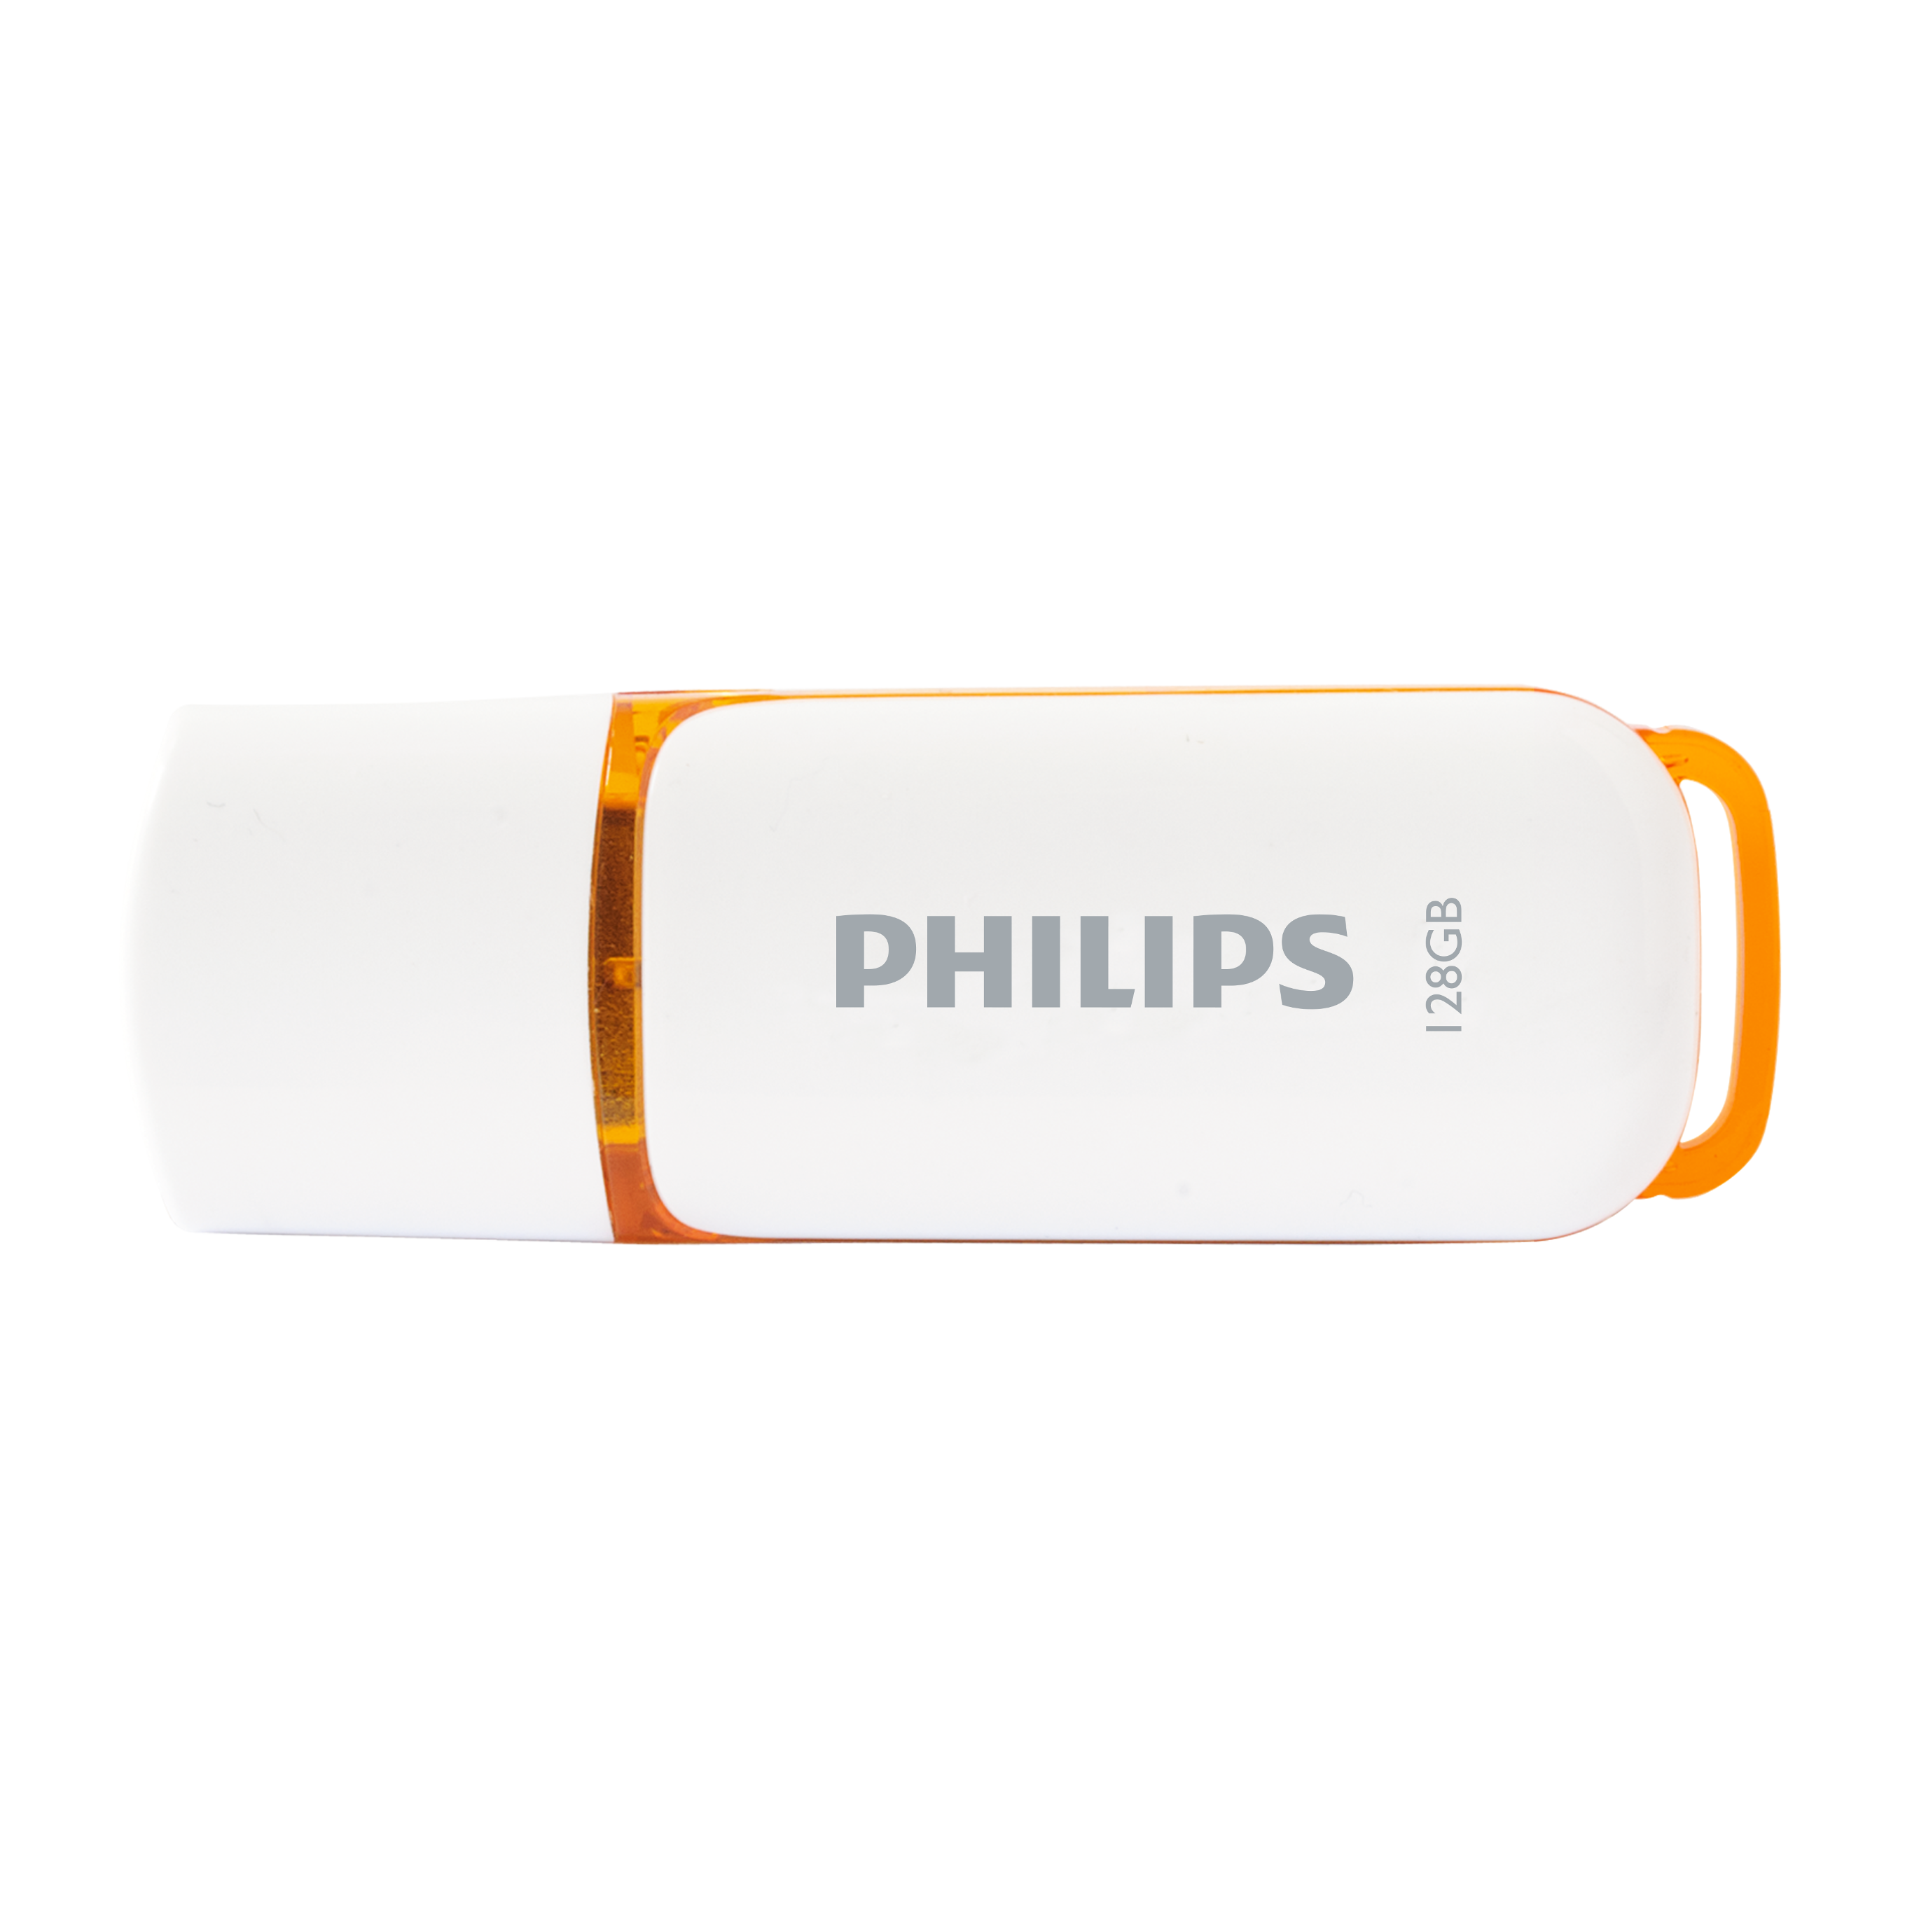 128 25 PHILIPS GB) Snow Edition (Weiß, MB/s Orange®, Sunrise USB-Stick